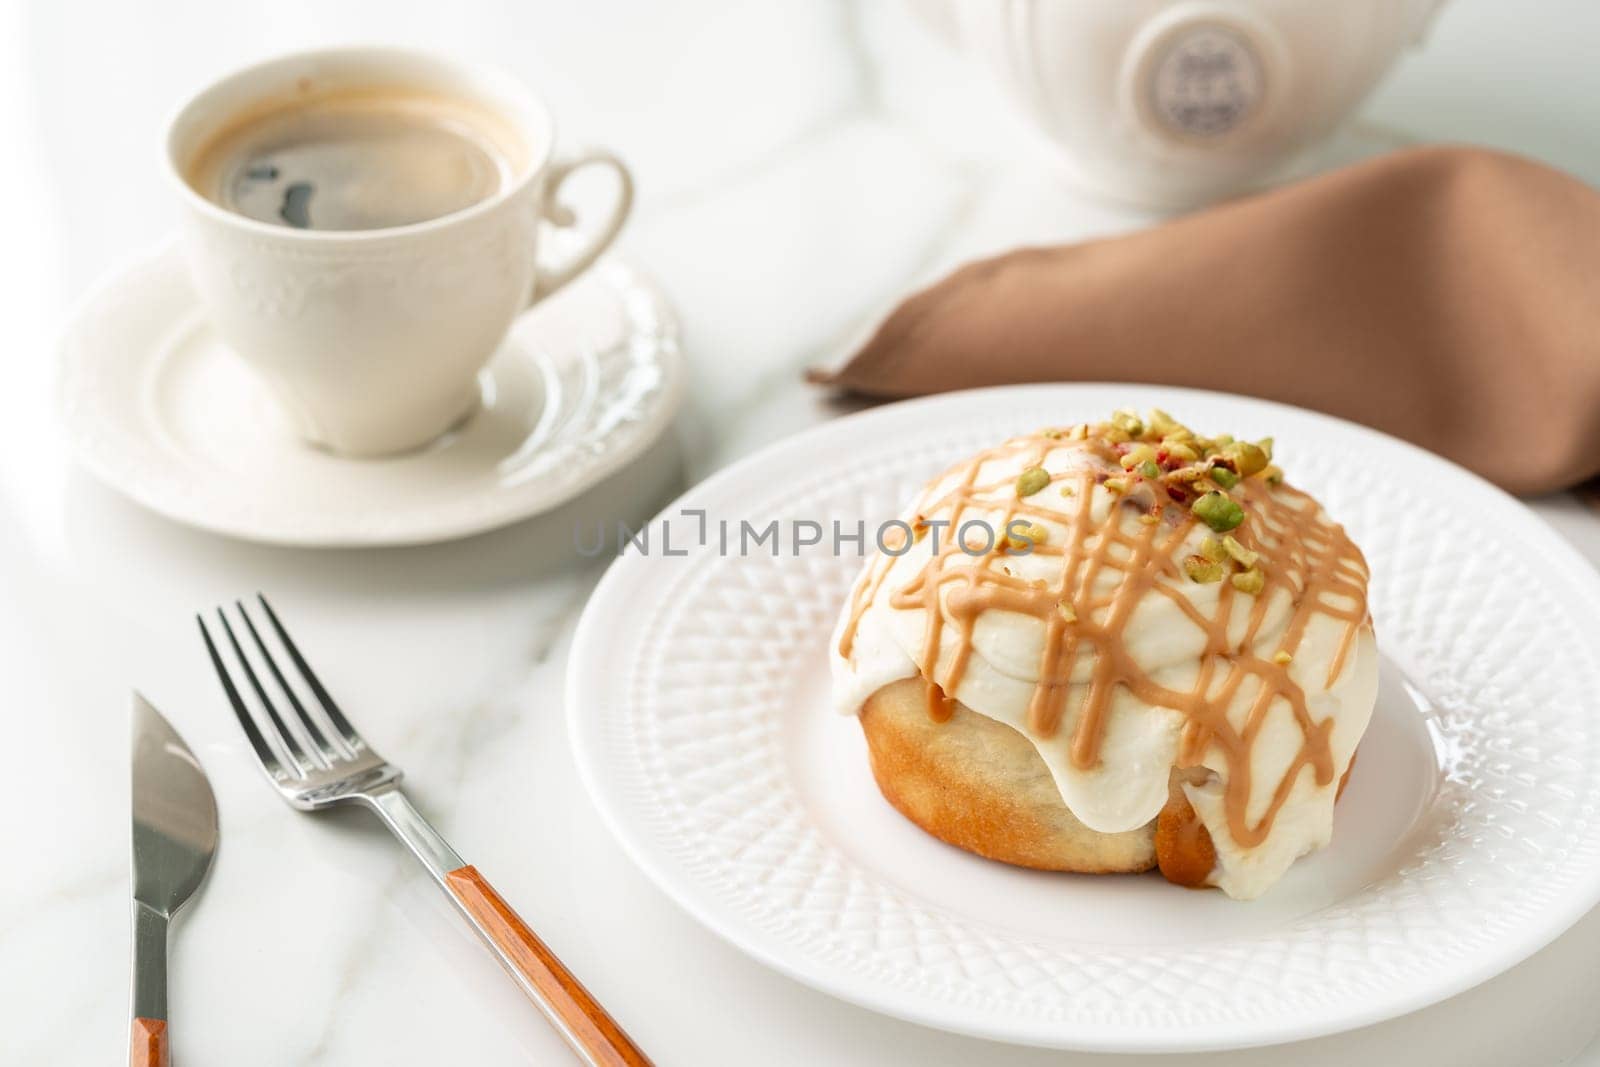 Cinnamon roll bun with icing on plate by Fabrikasimf